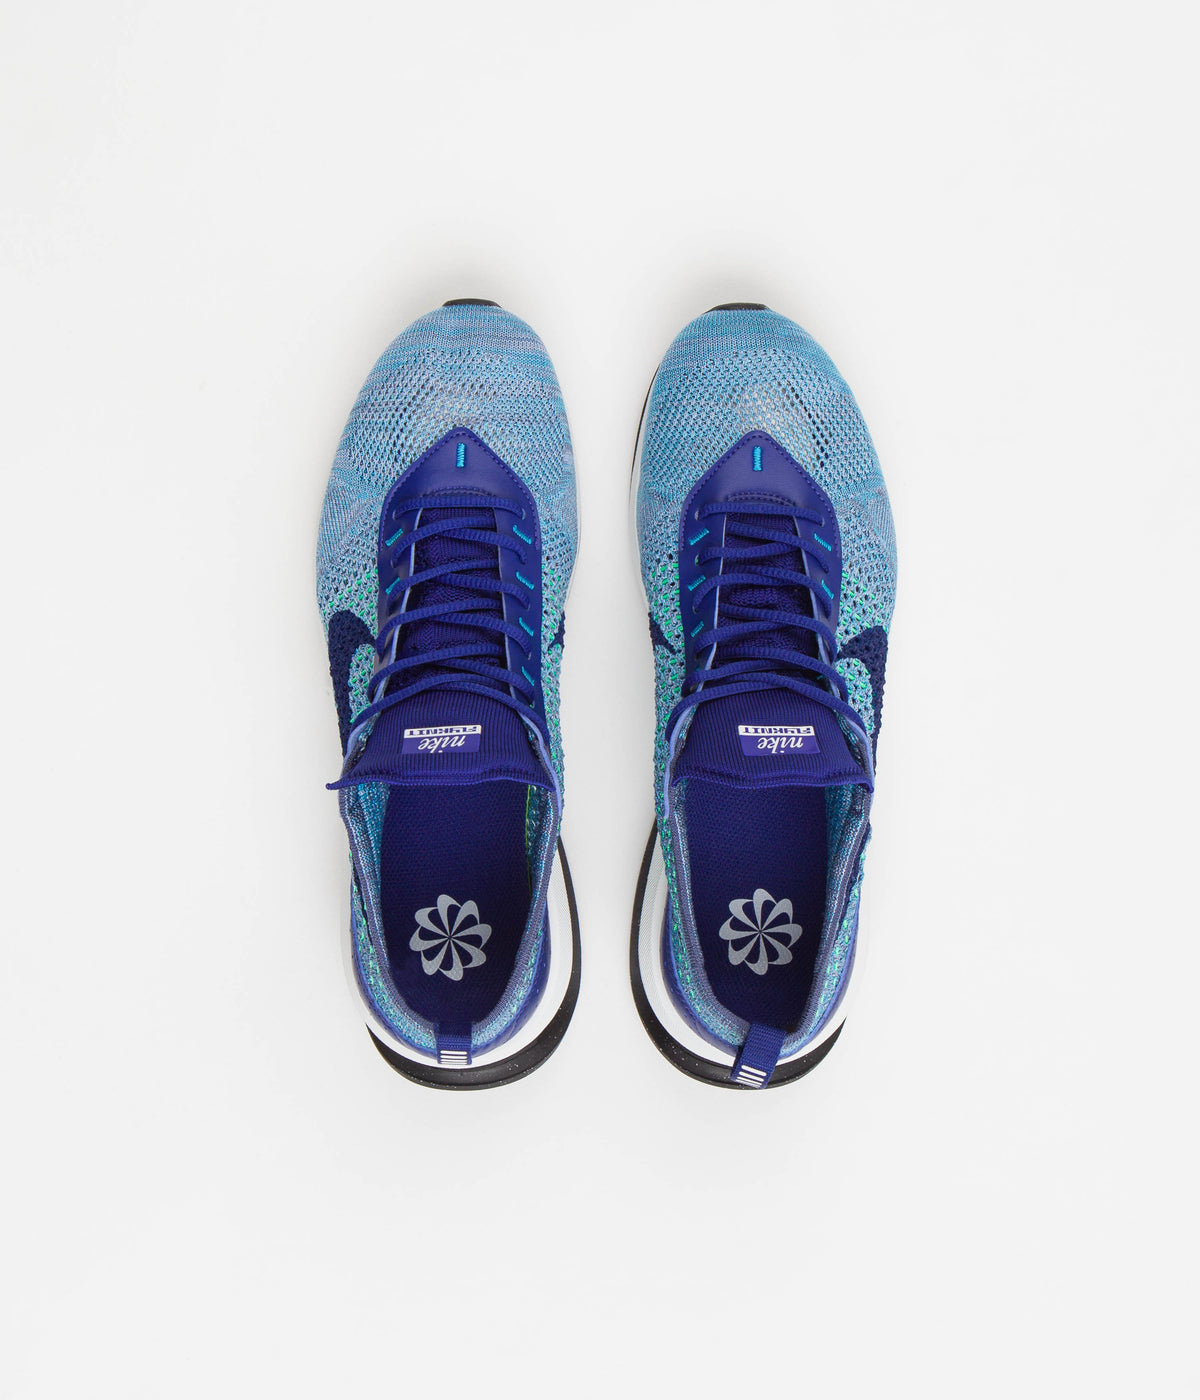 Nike Air Max Flyknit Racer Shoes - Deep Royal Blue / Deep Royal